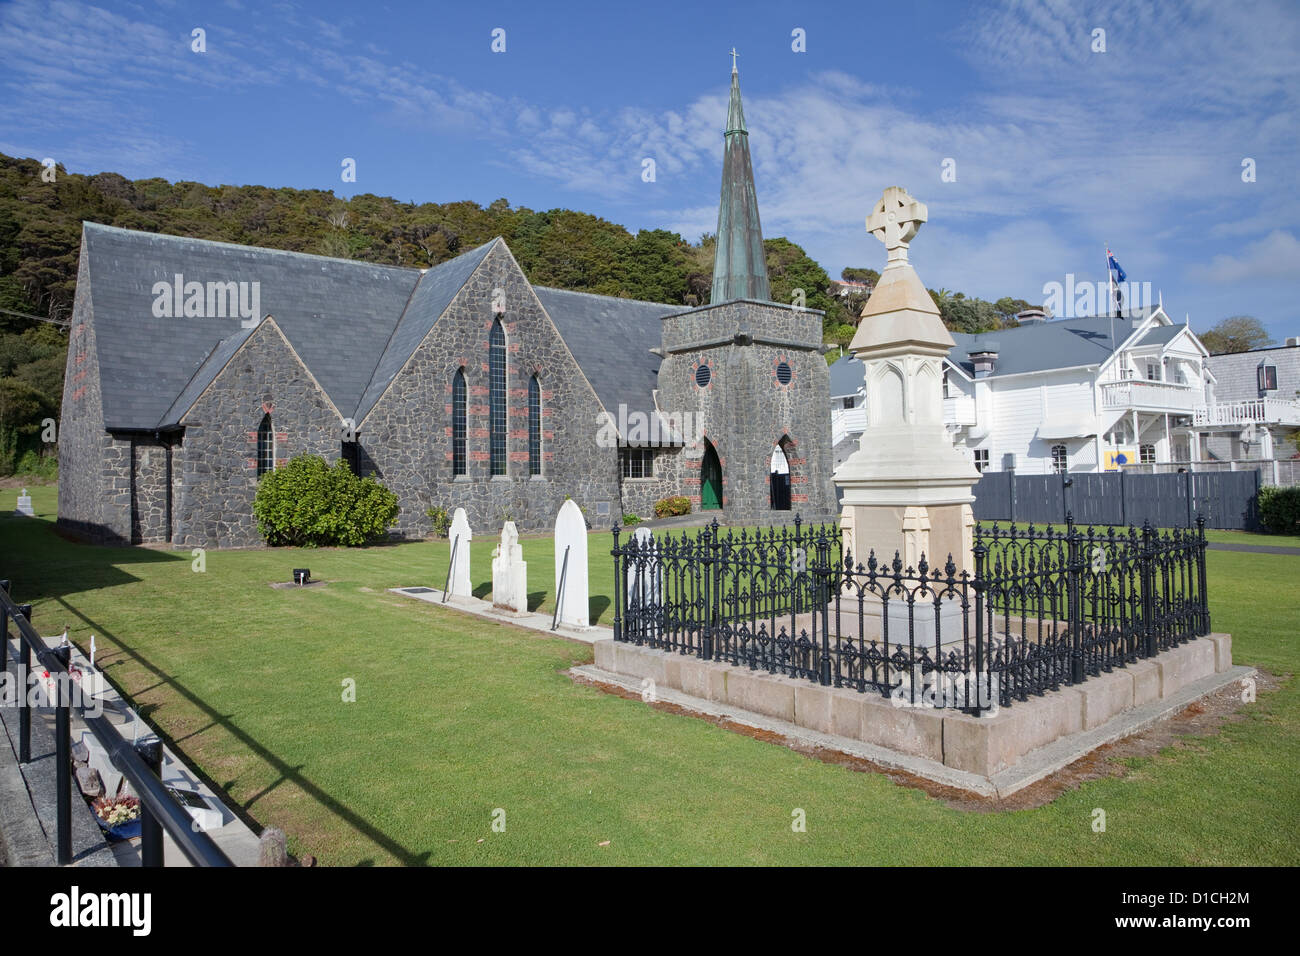 Str. Pauls anglikanische Kirche, Paihia, Nordinsel, Neuseeland. Gebaut 1925. Stockfoto